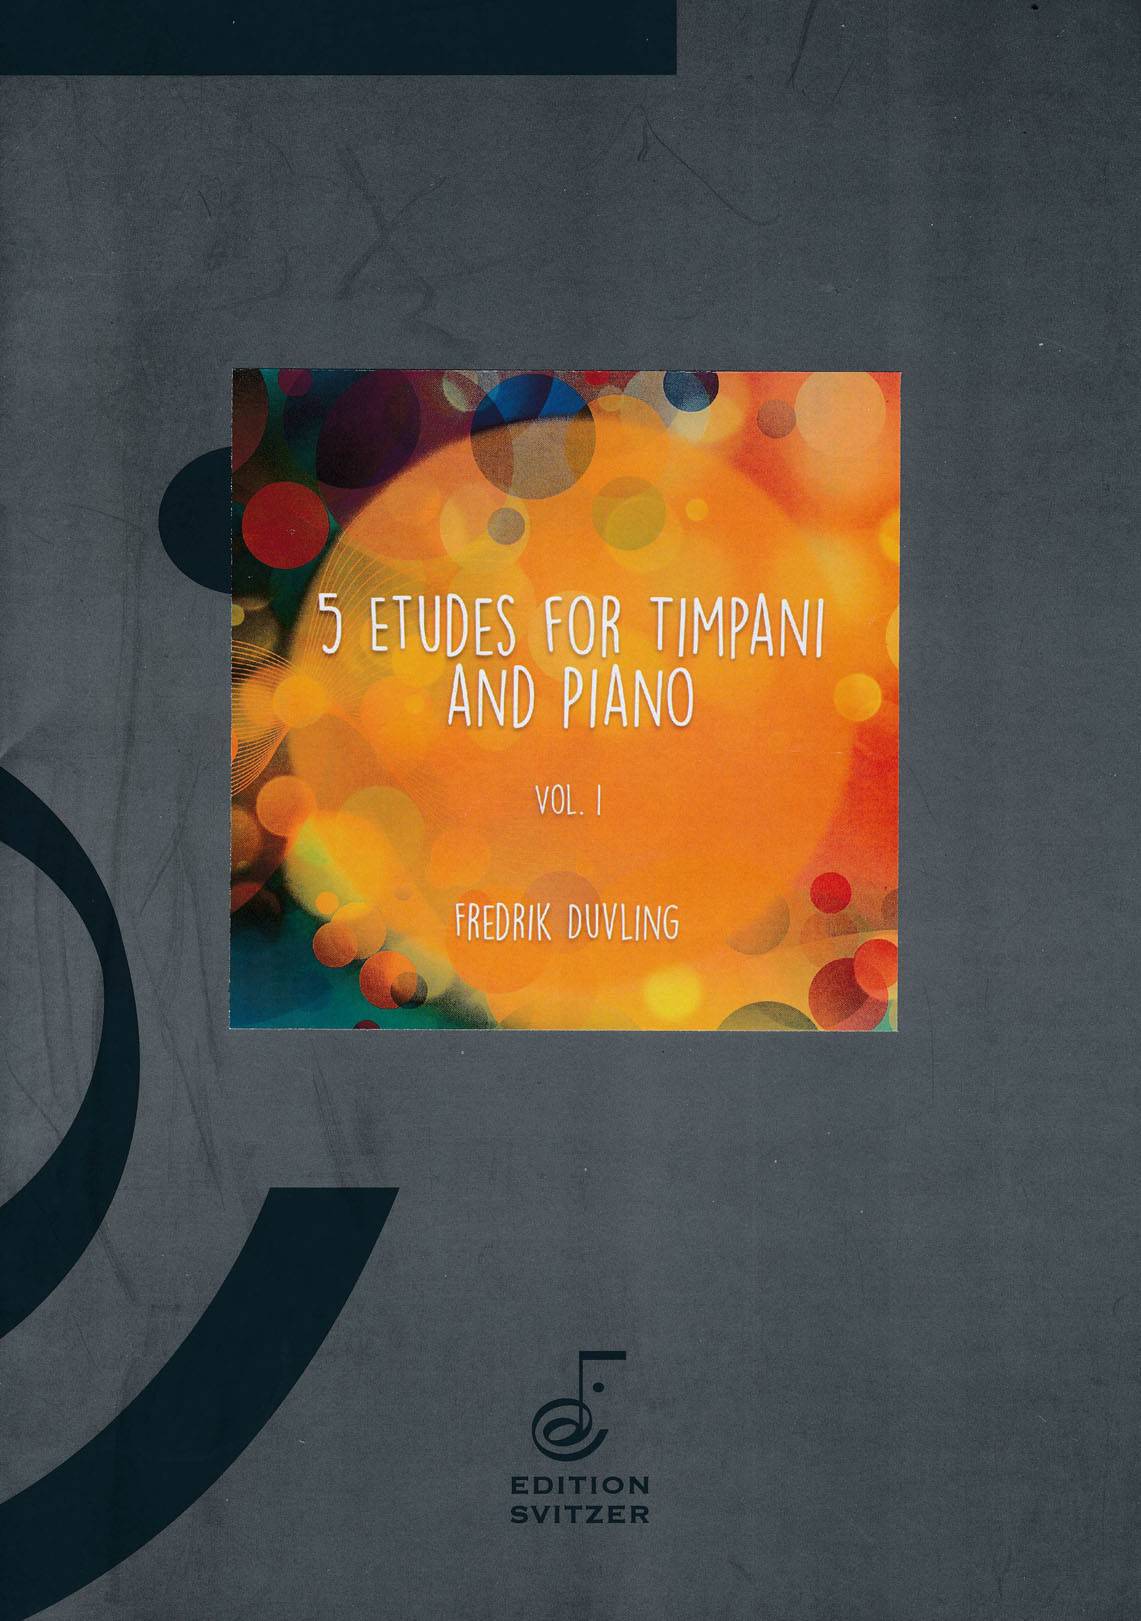 5 Etudes for Timpani and Piano (vol. 1) by Fredrik Duvling